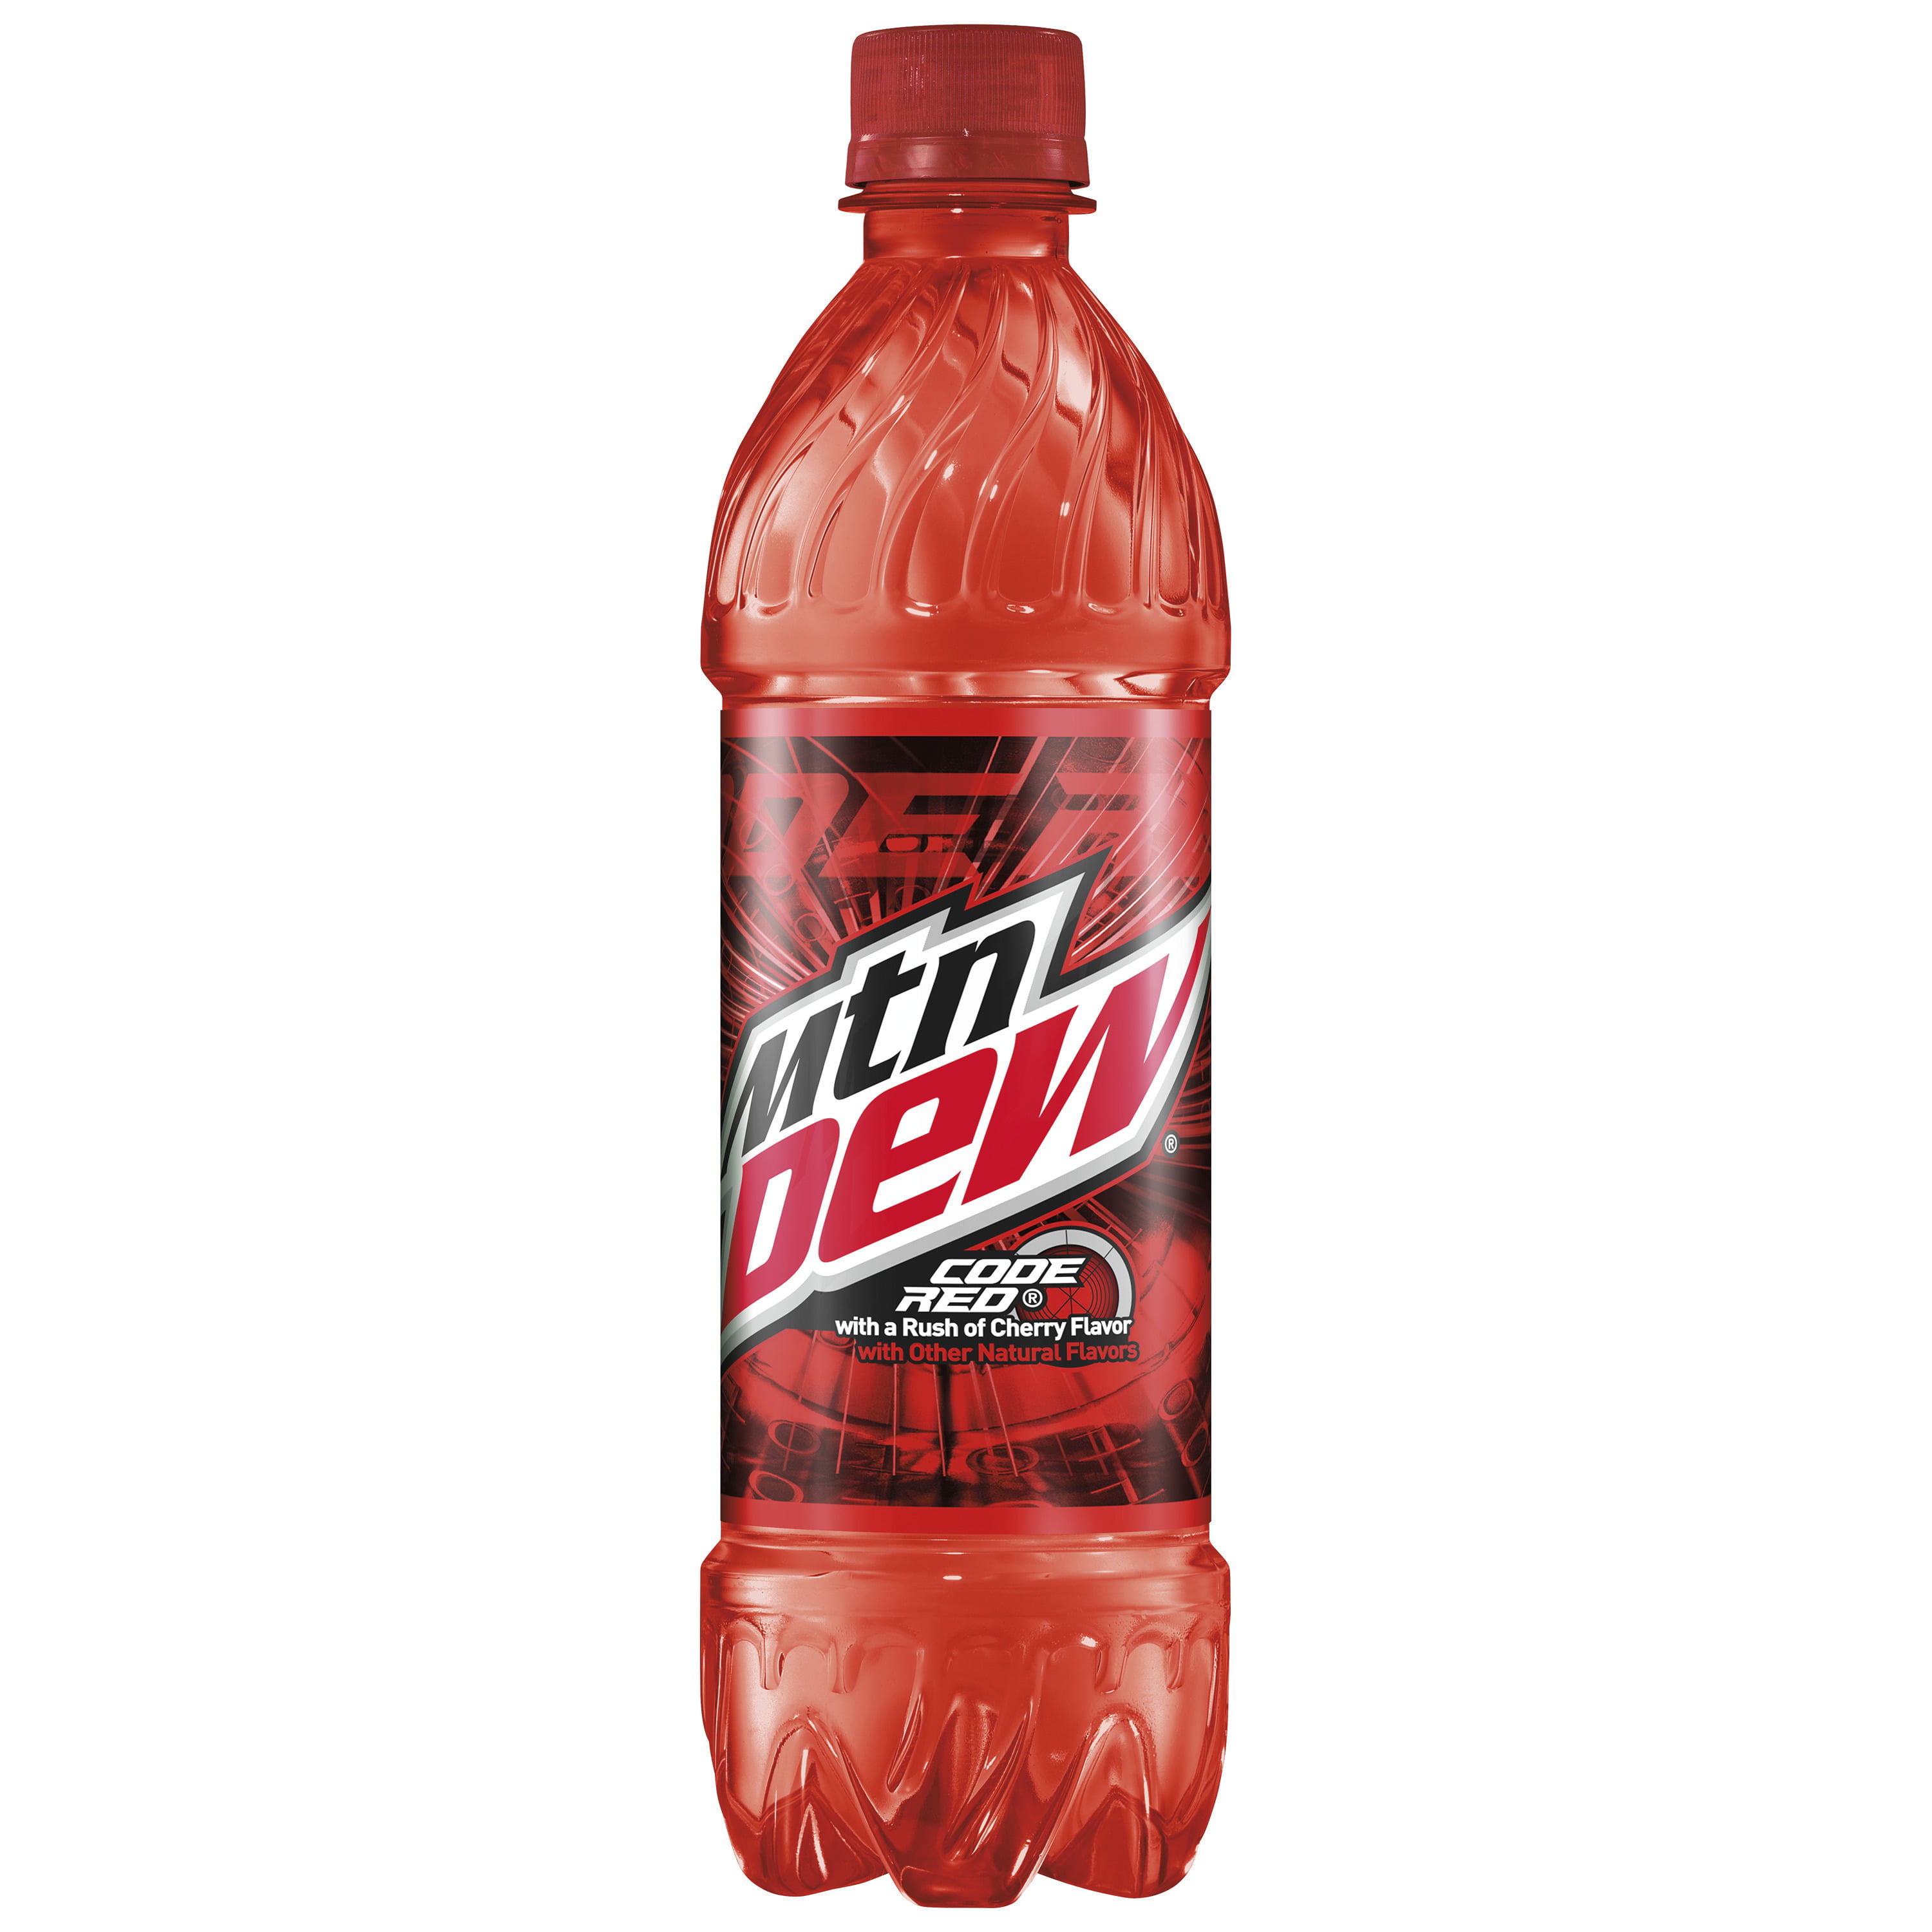 Mountain Dew Code Red Soda 16 9 Oz Bottles 6 Count Walmart Com Walmart Com